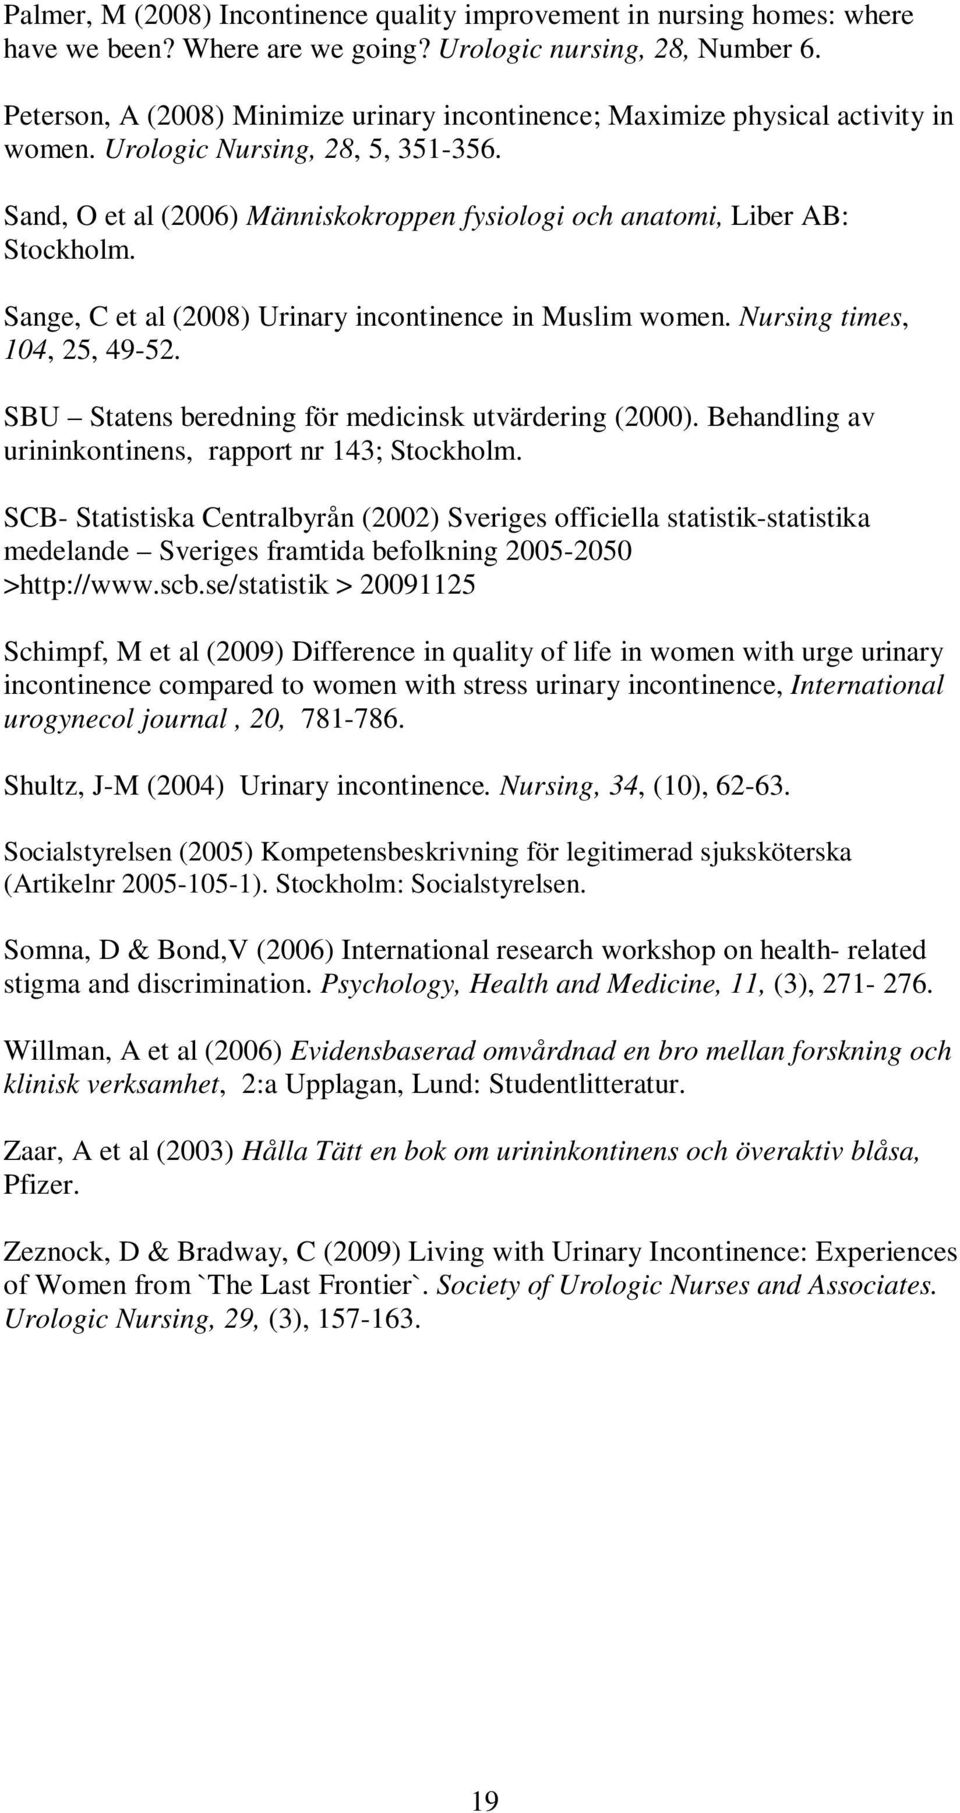 Sand, O et al (2006) Människokroppen fysiologi och anatomi, Liber AB: Stockholm. Sange, C et al (2008) Urinary incontinence in Muslim women. Nursing times, 104, 25, 49-52.